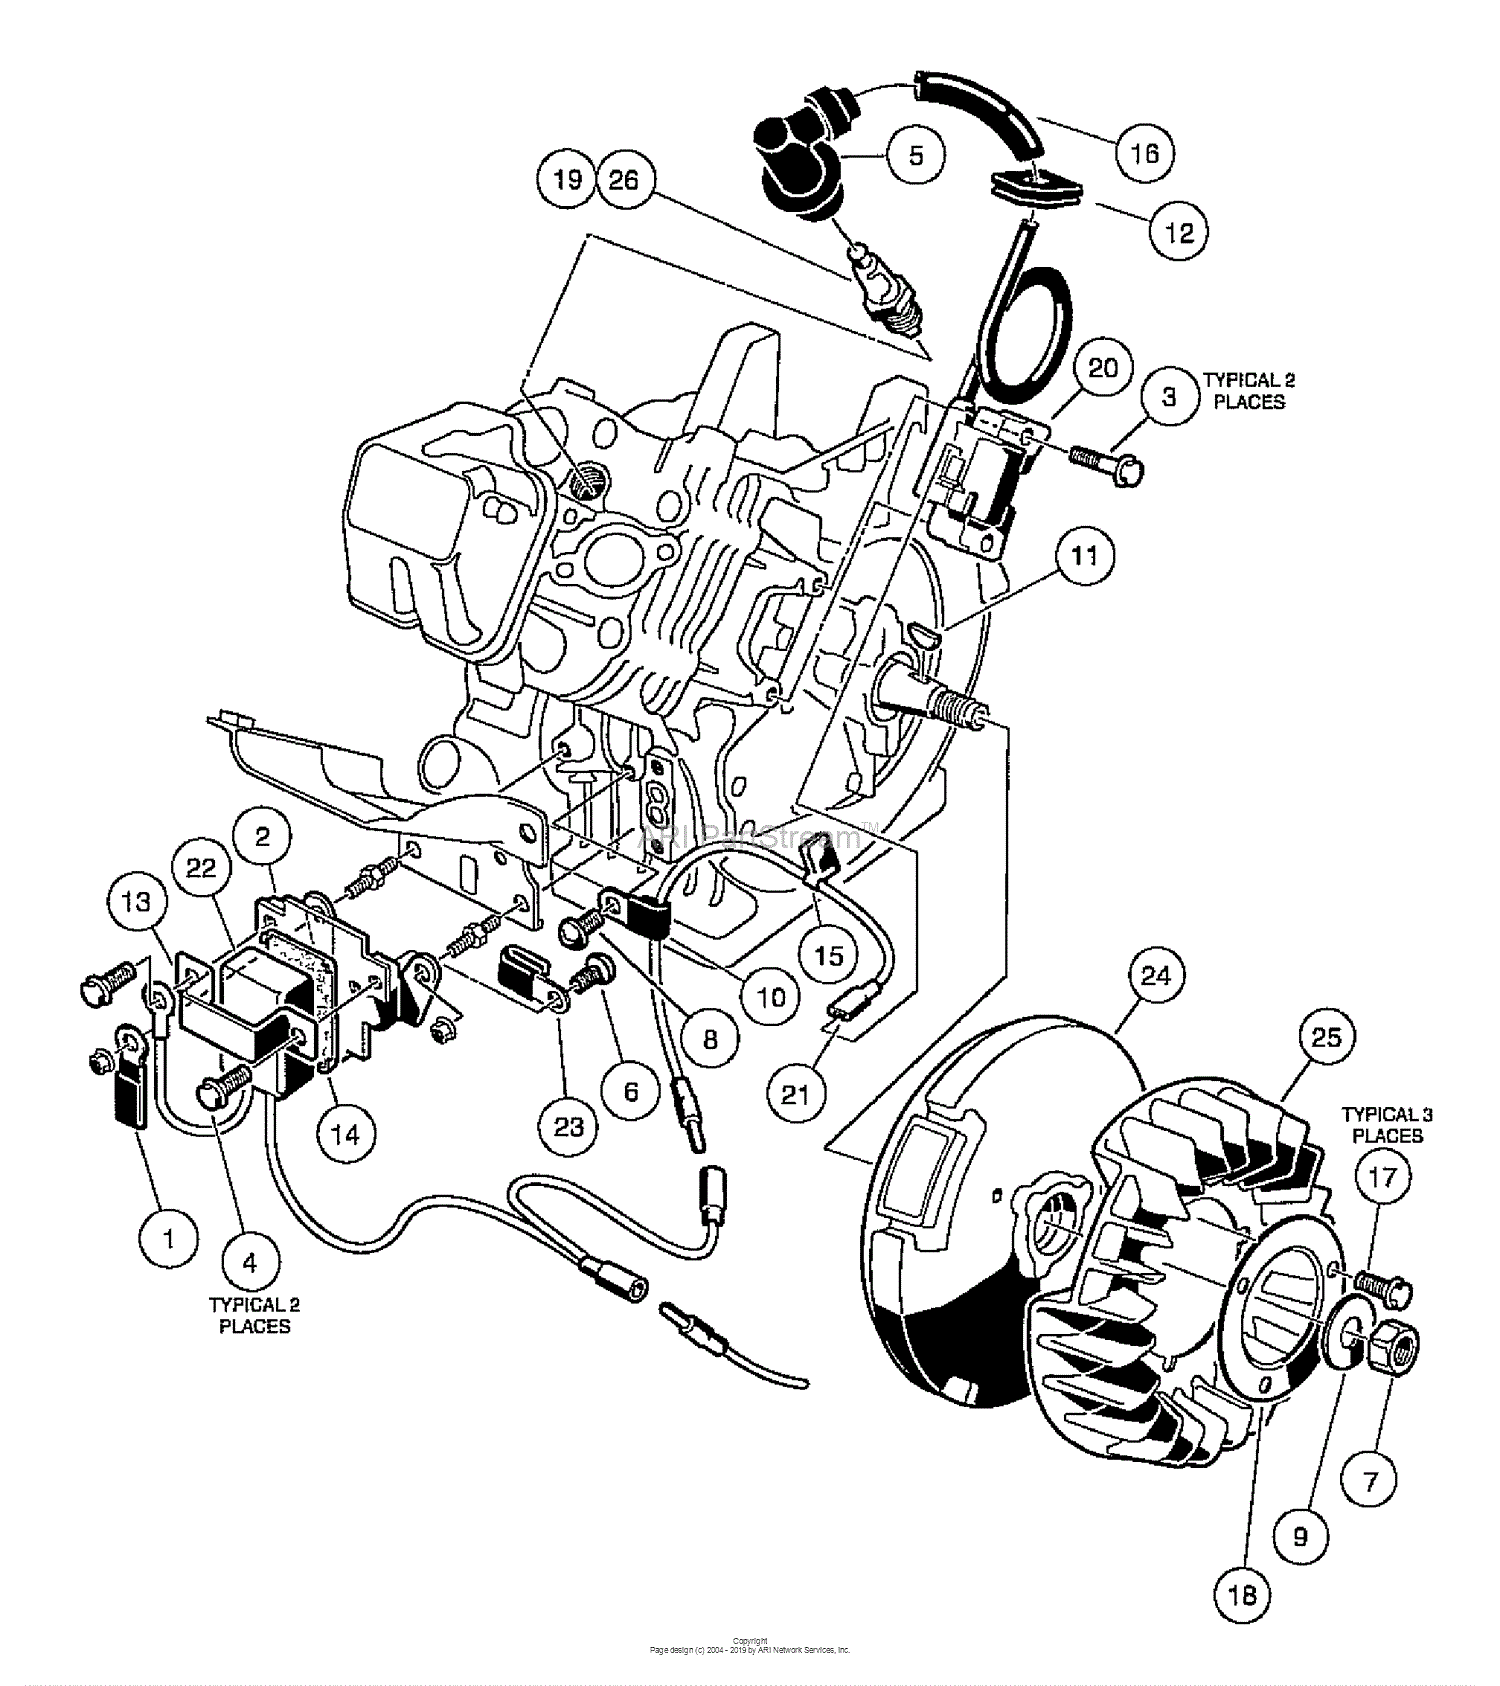 Diagram Club Car Gas Engine Diagram Full Version Hd Quality Engine Diagram Diagramsteach Esserevolontario It